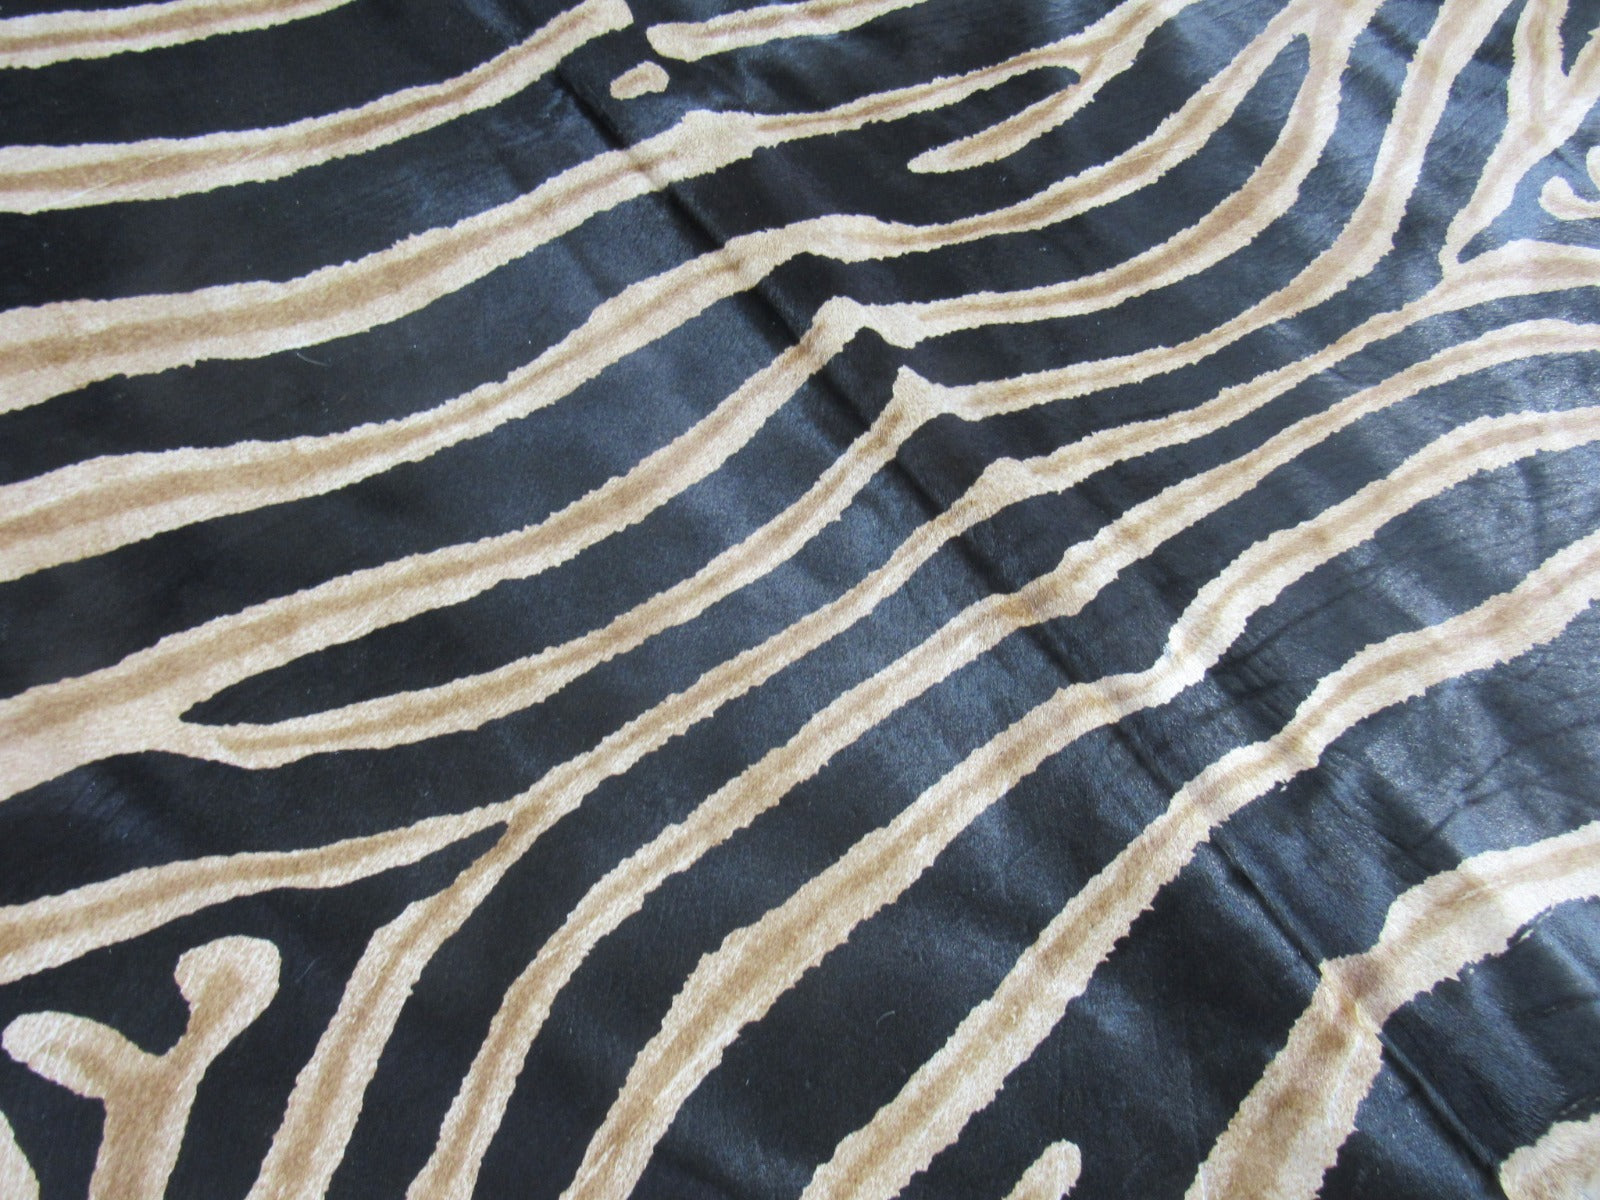 Genuine Zebra Print Cowhide Rug Size: 7' X 6' Black Stripes, Grey/Light Brown Inner Stripes Zebra Print Cowhide Rug